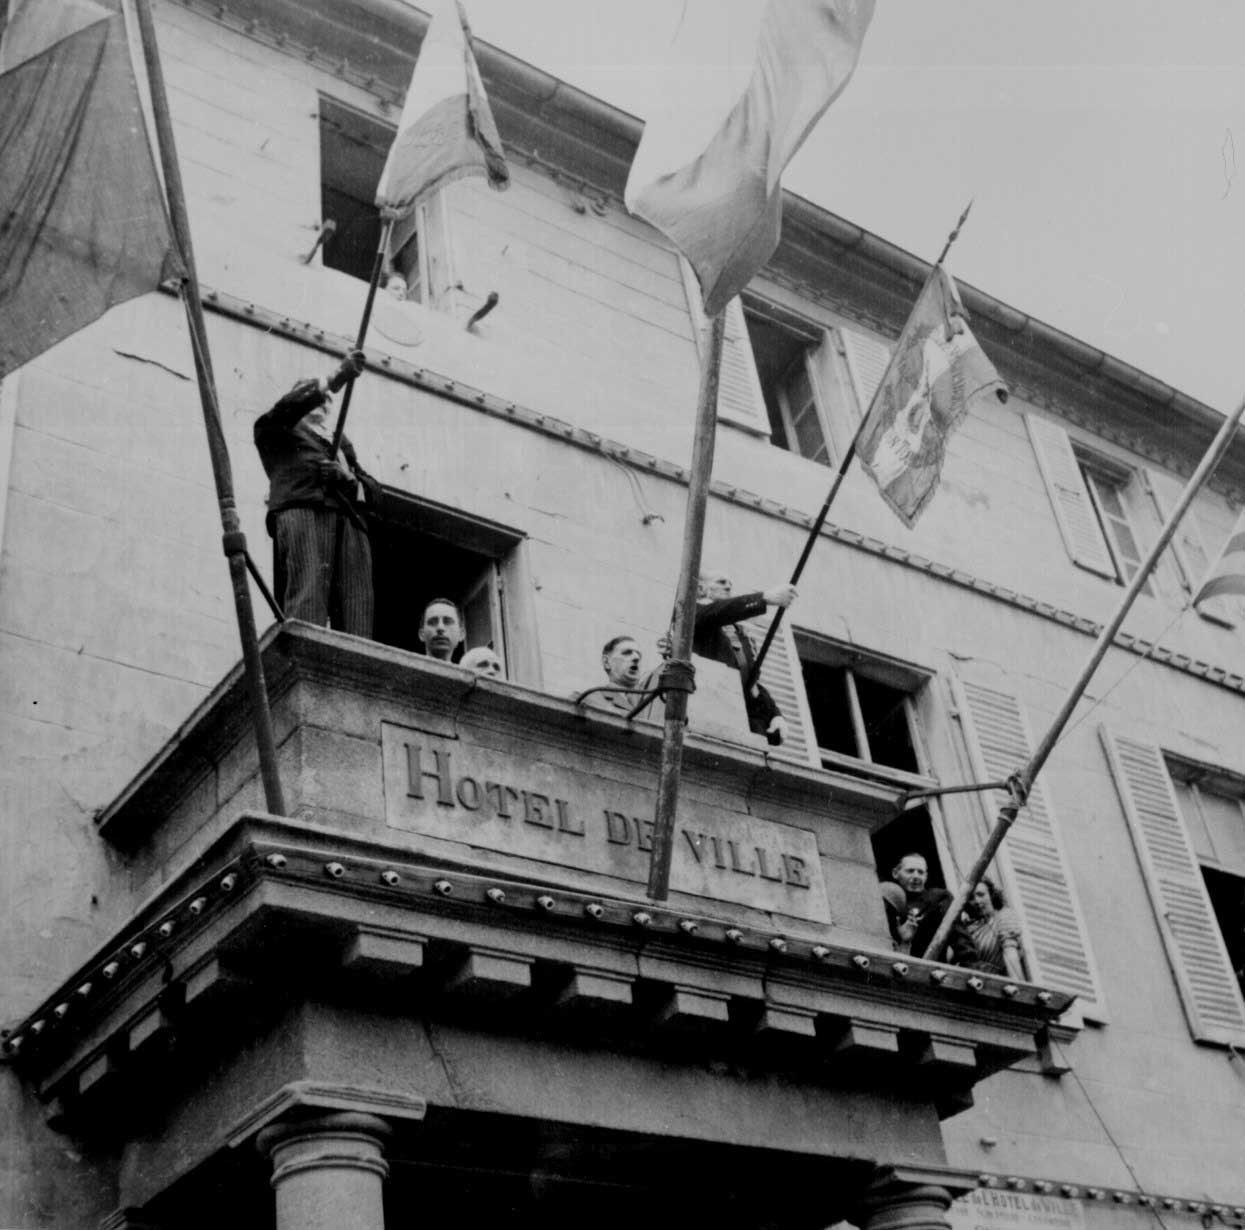 Charles de Gaulle spoke at the balcony of Hotel de Ville, Cherbourg, France, 20 Aug 1944